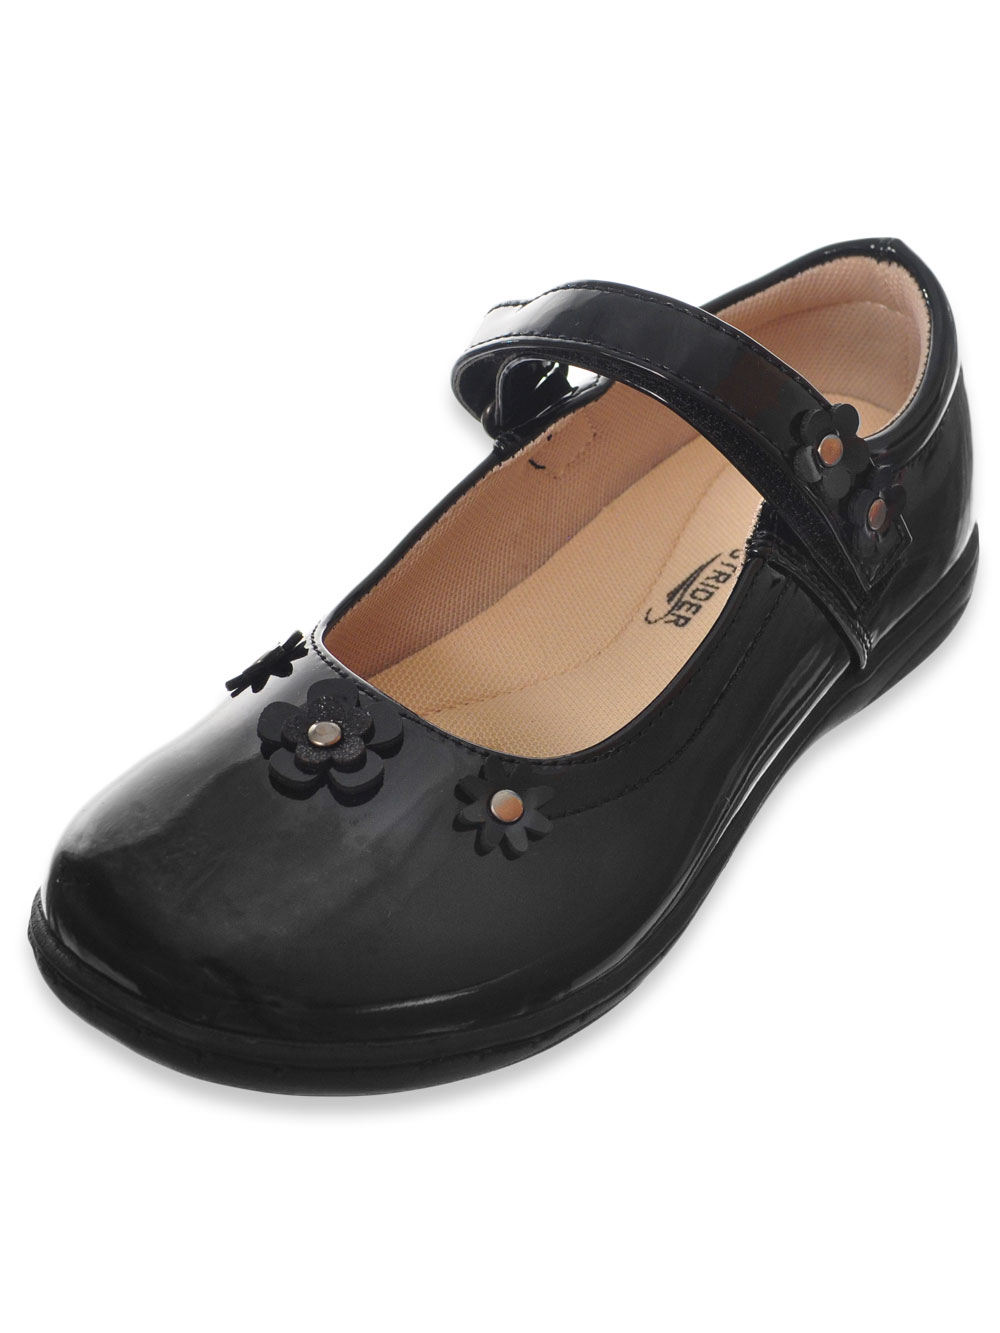 black mary jane shoes girl